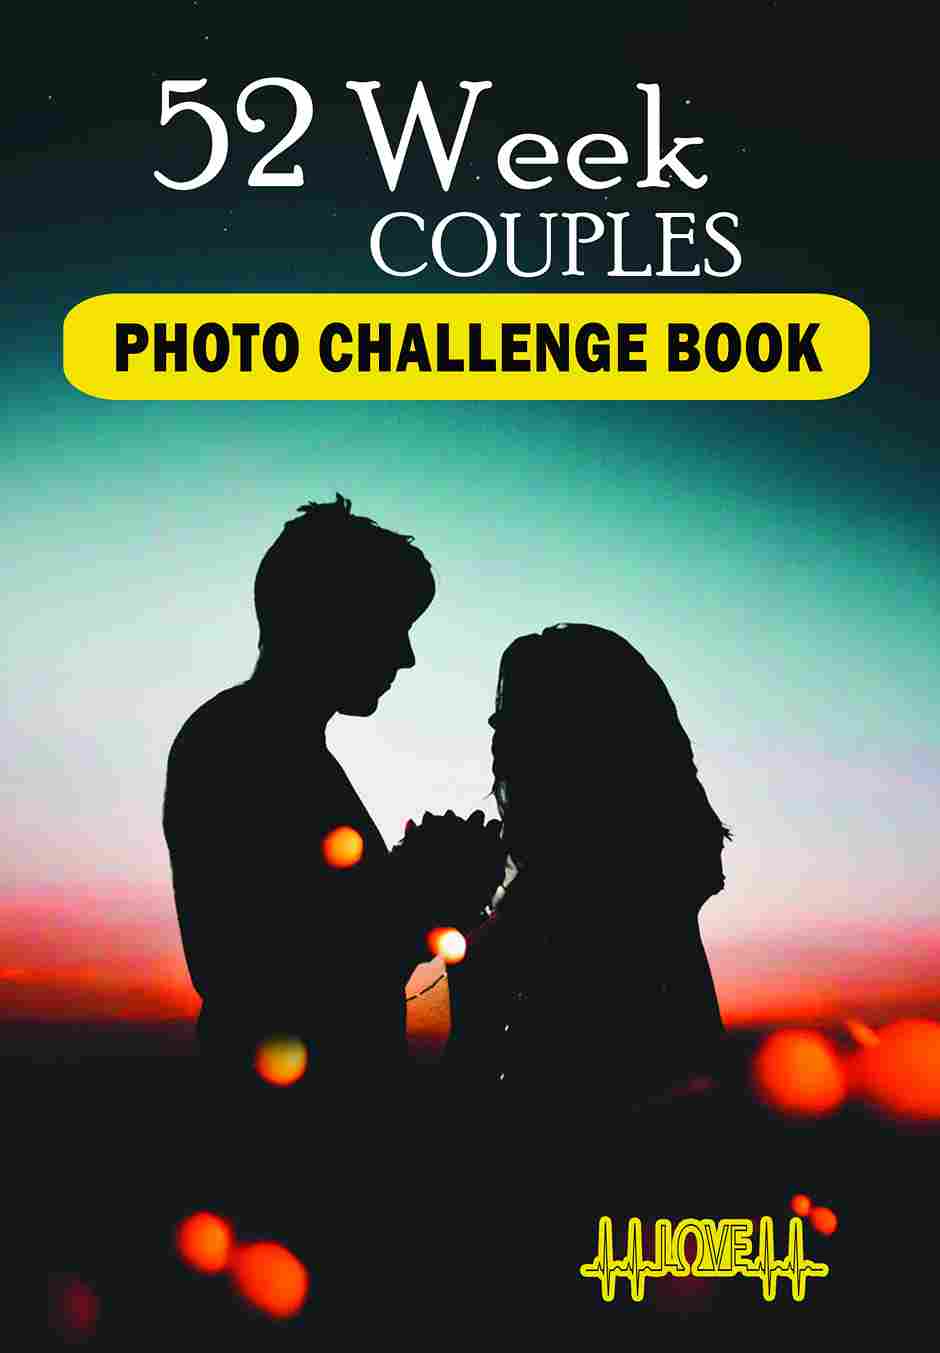 52 Week Couples Photo Challenge Book